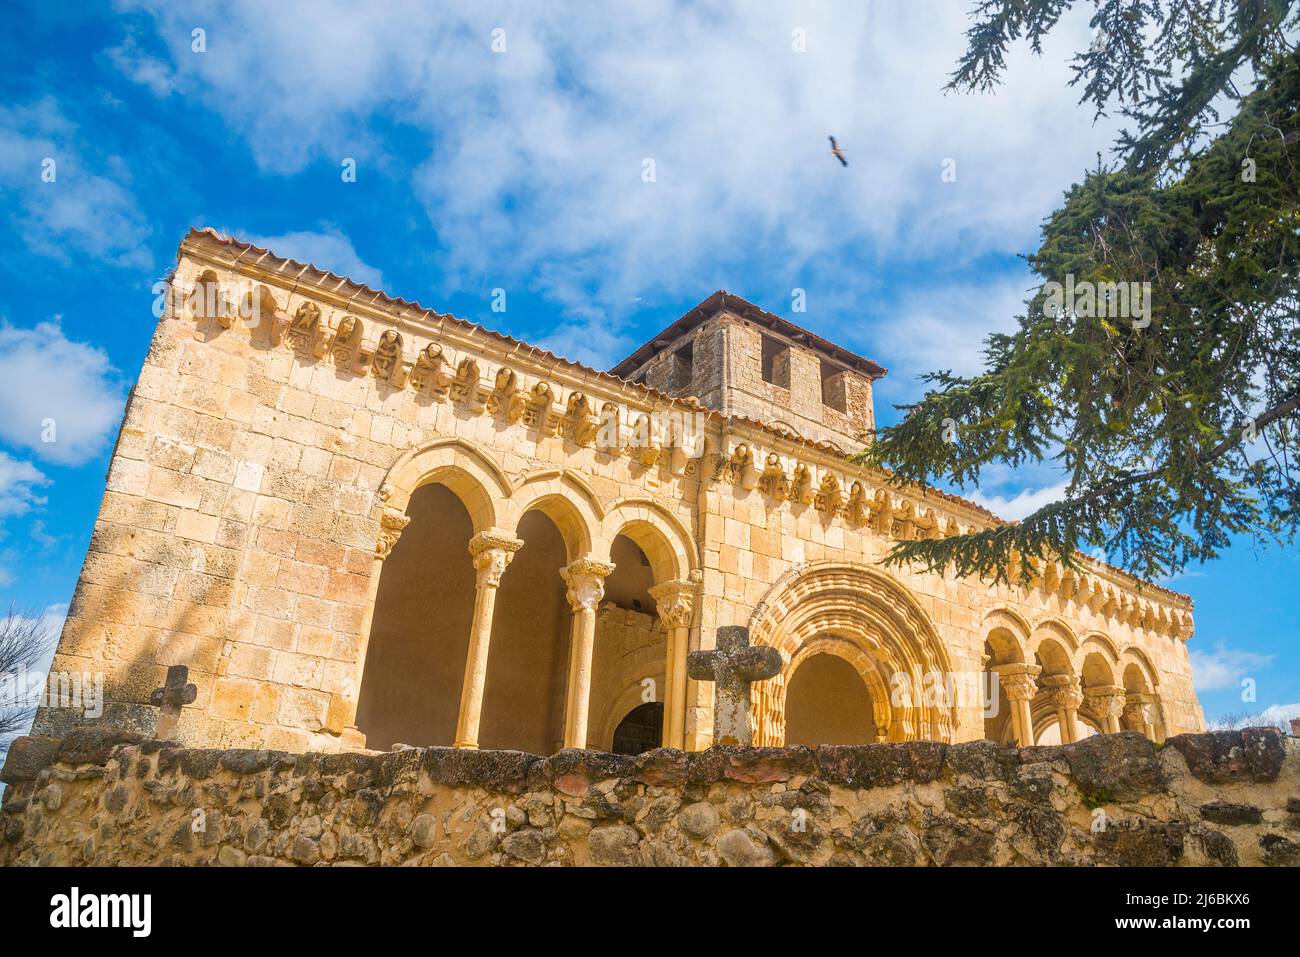 Romanesque church. Sotosalbos, Segovia province, Castilla Leon, Spain. Stock Photo